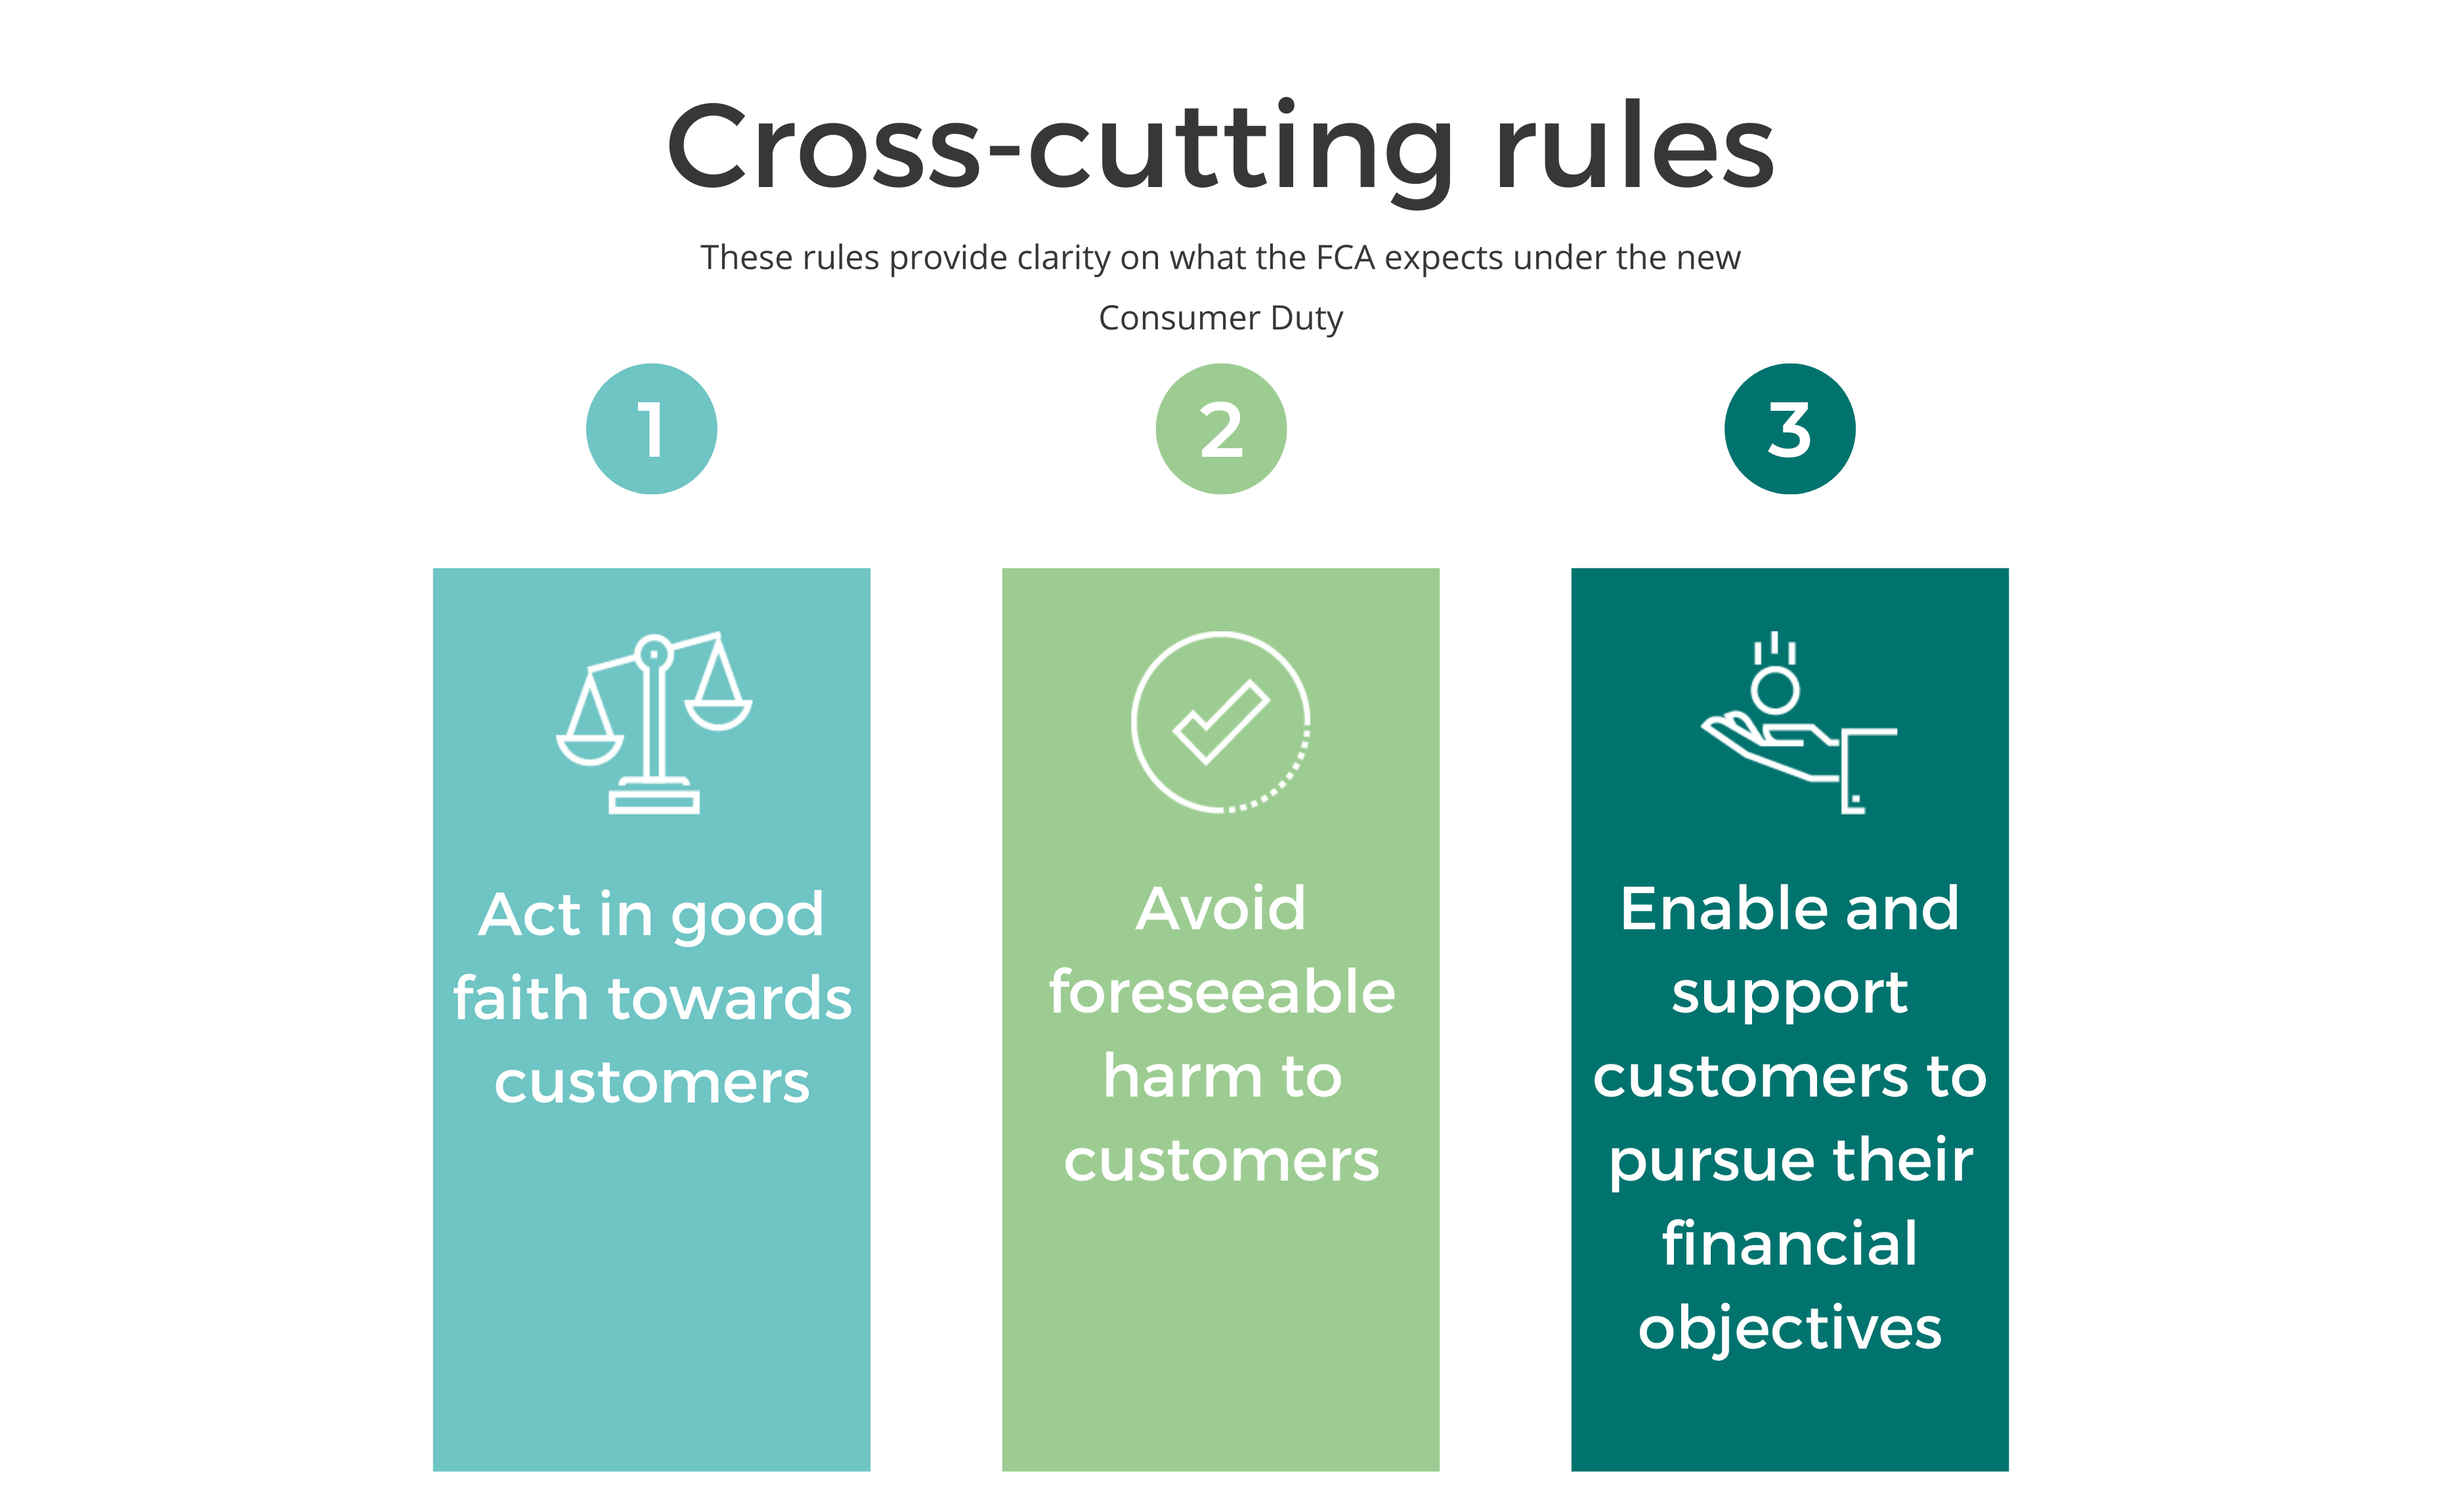 Cross-cutting rules